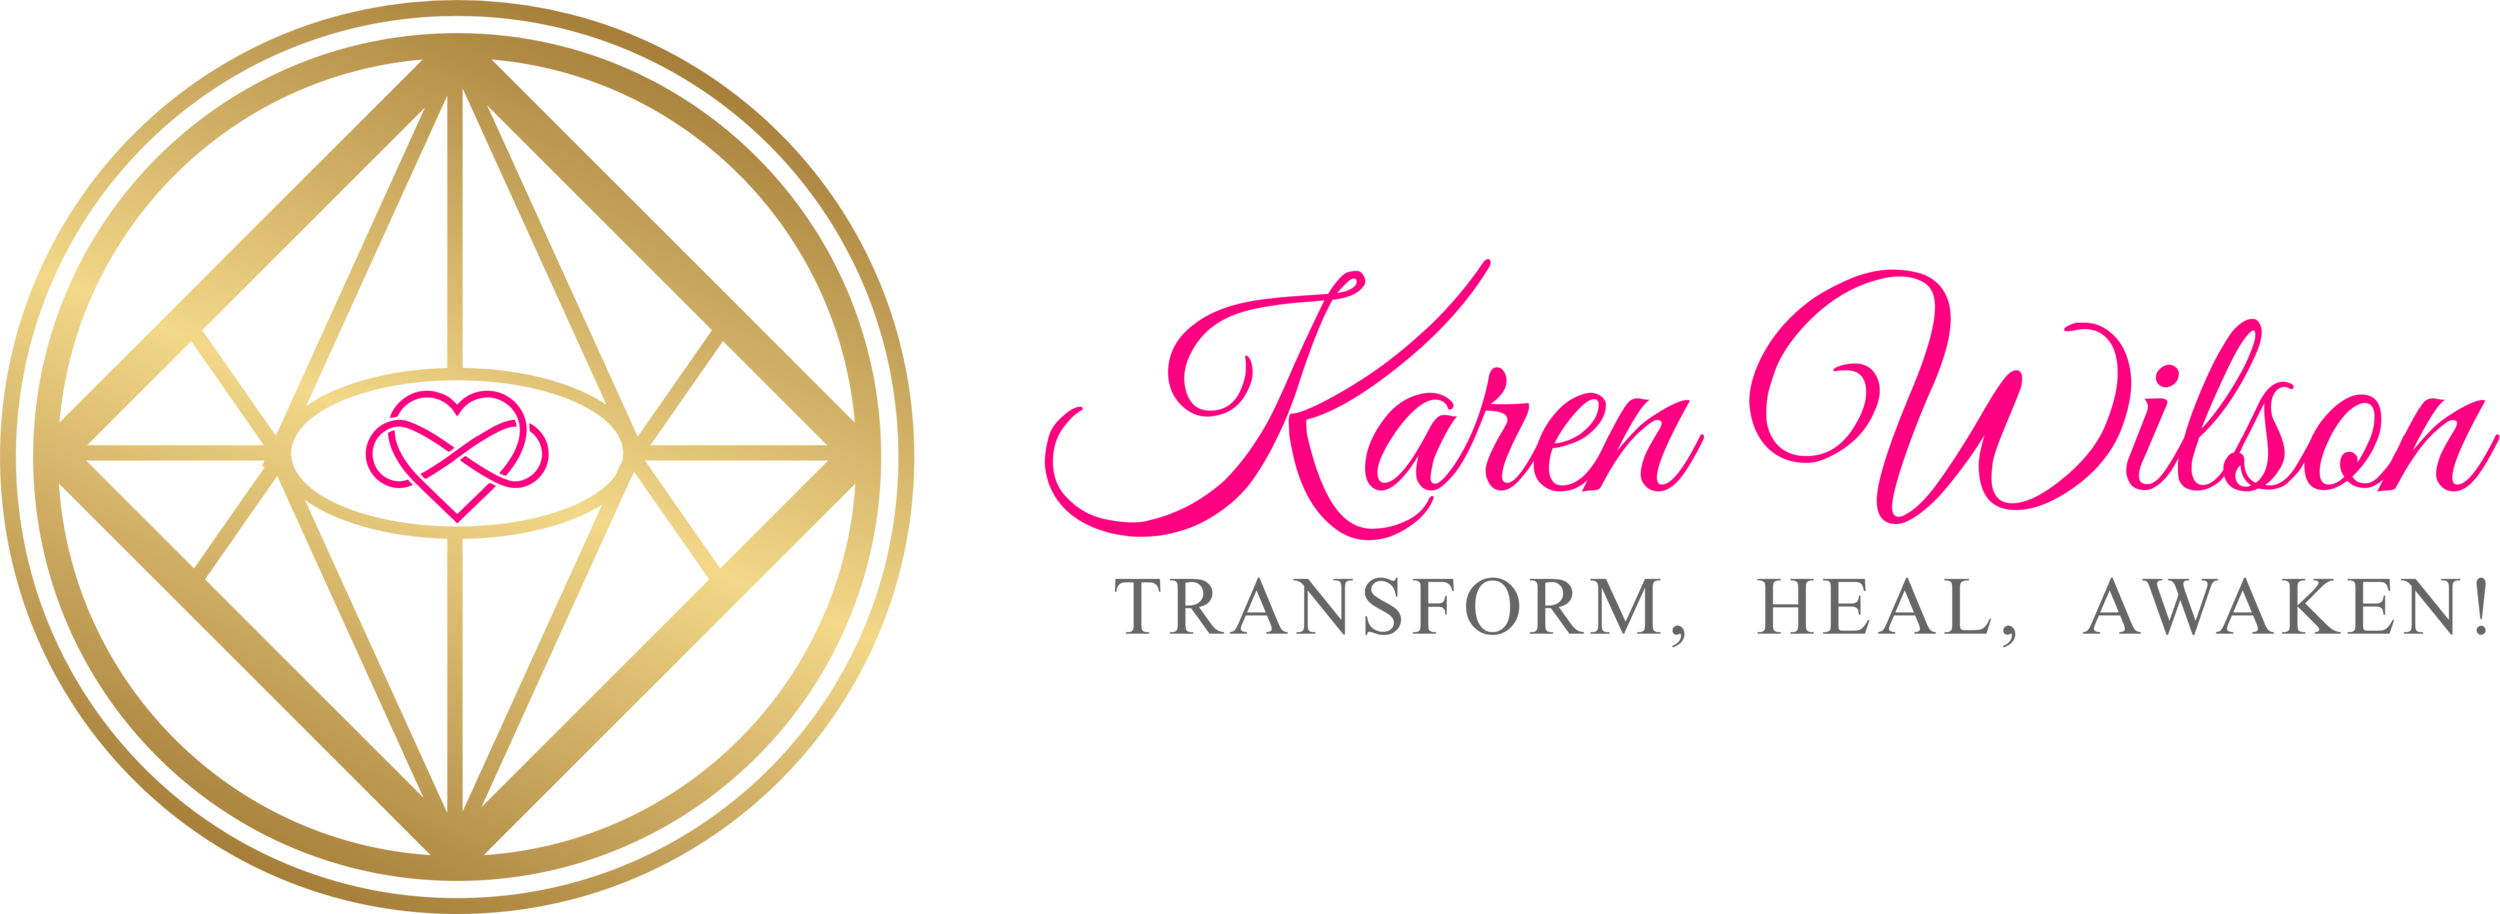 Karen Wilson Healing LLC